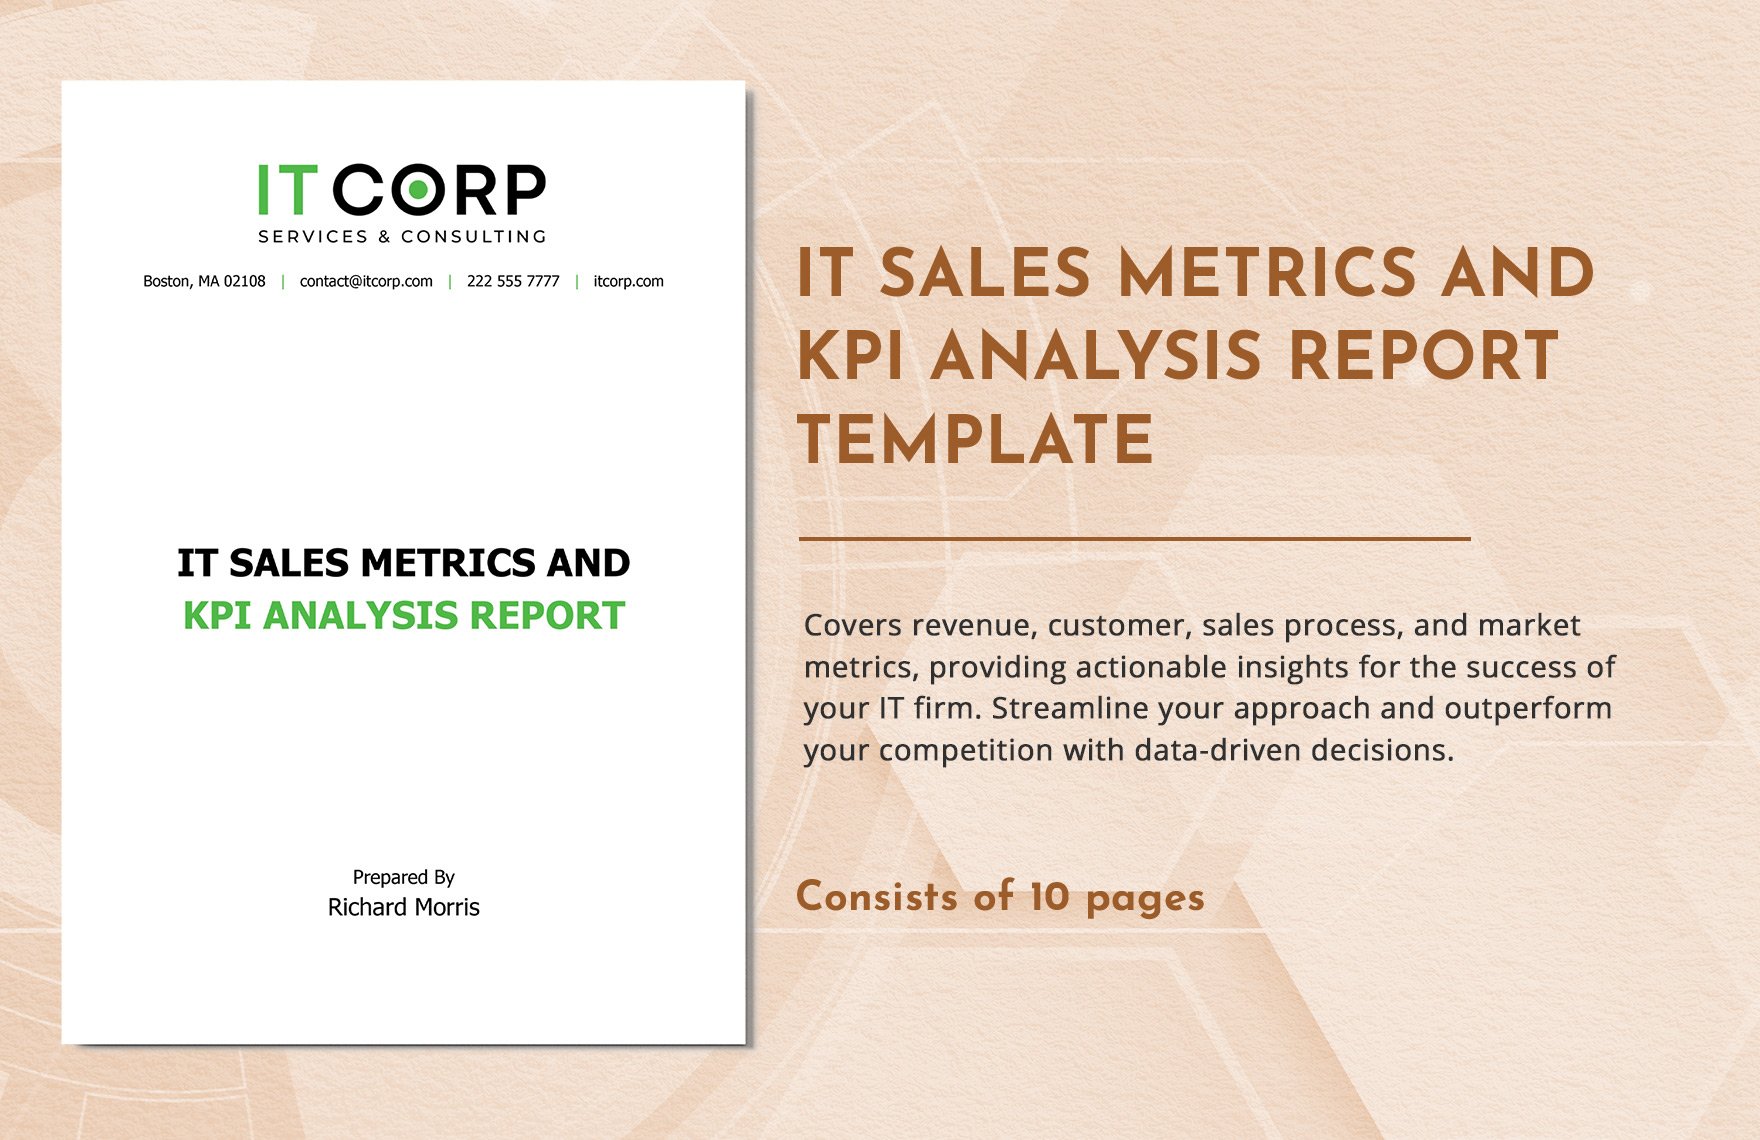 IT Sales Metrics and KPI Analysis Report Template